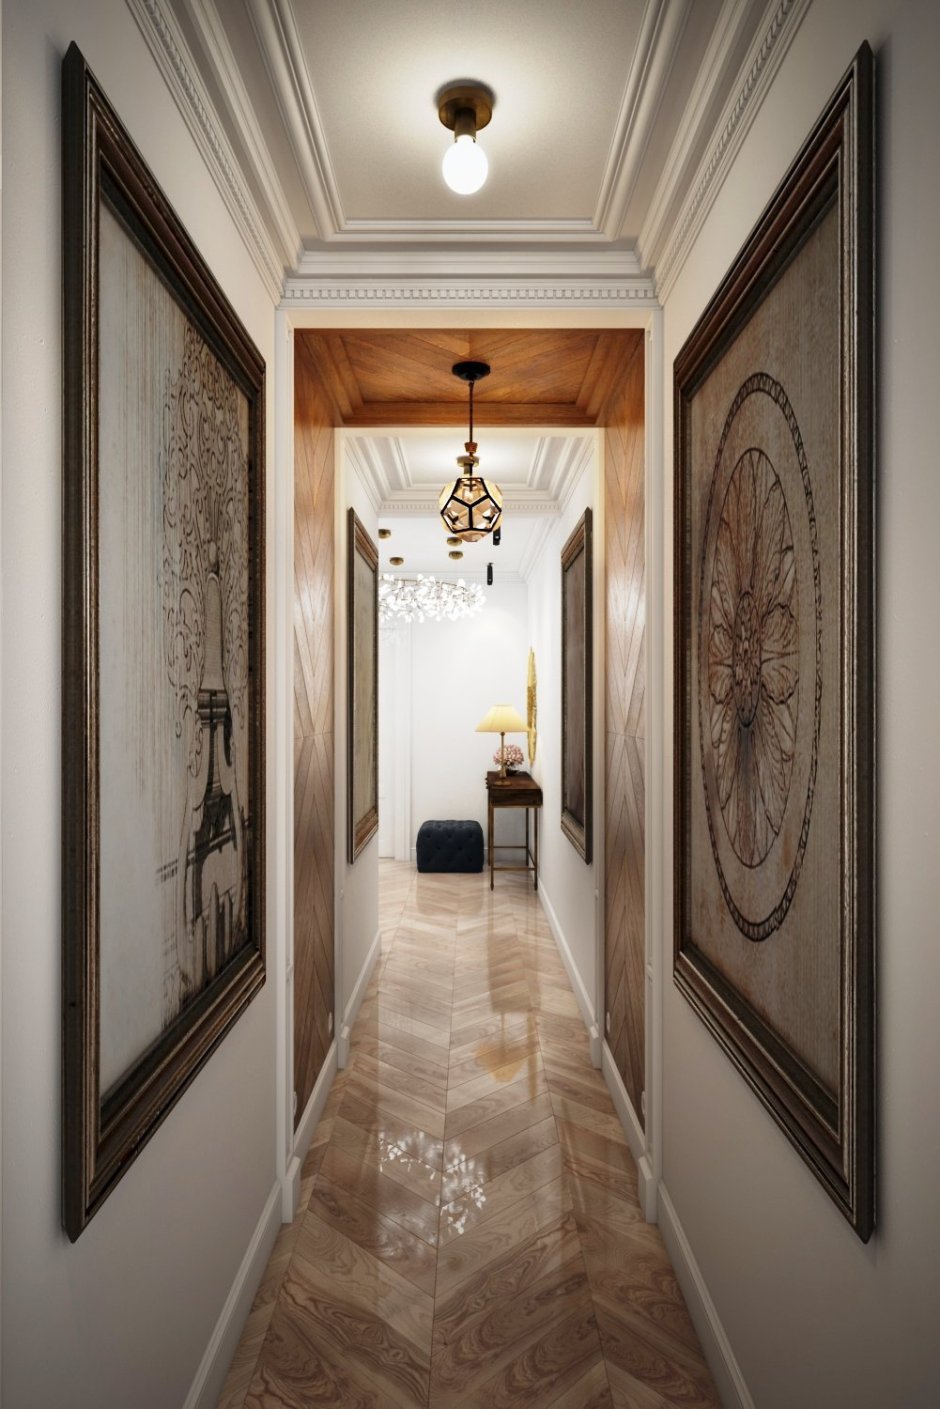 Дизайн узкого коридора в квартире